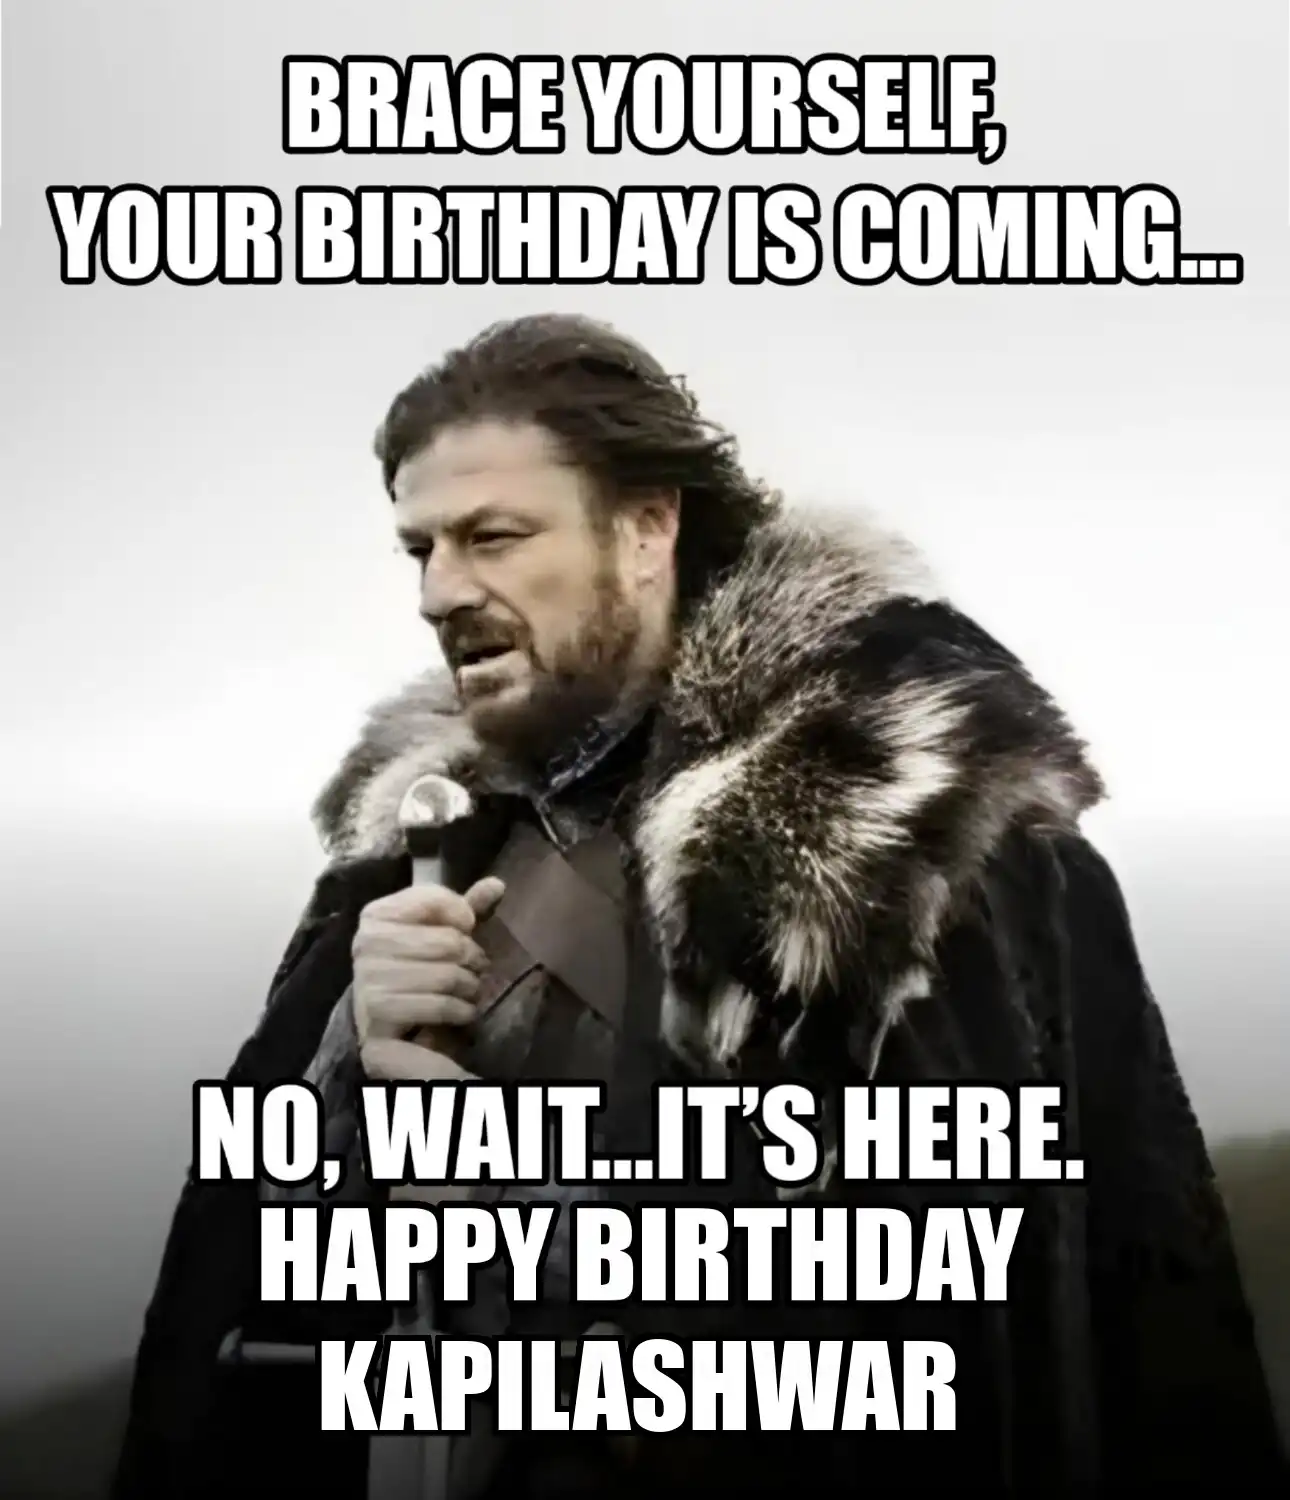 Happy Birthday Kapilashwar Brace Yourself Your Birthday Is Coming Meme